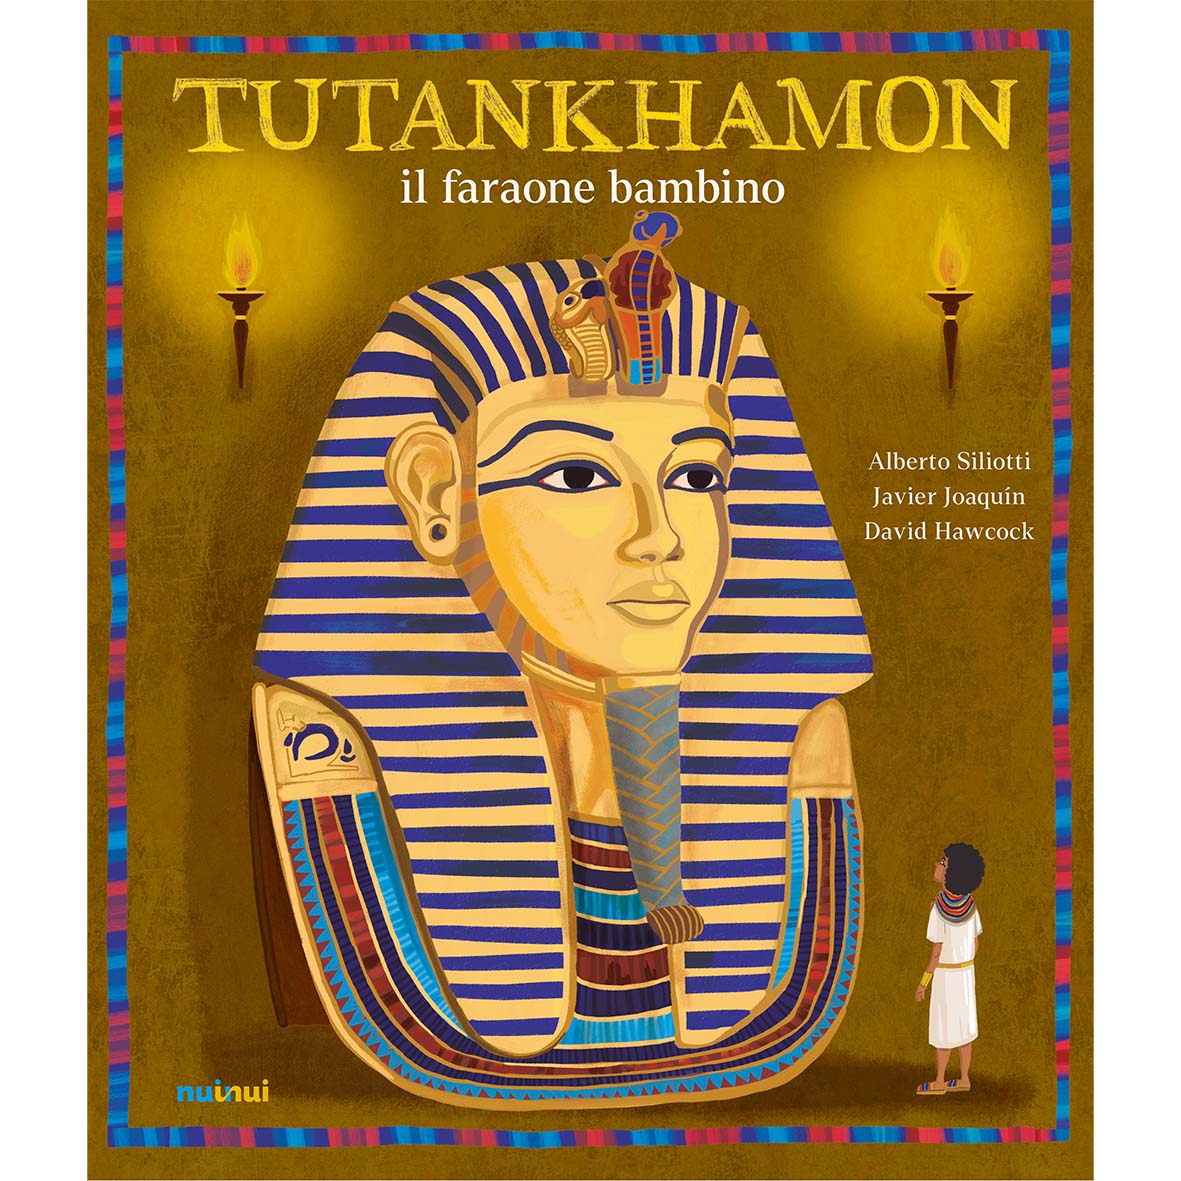 Deluxe pop up - Tutankhamun - The child pharaoh